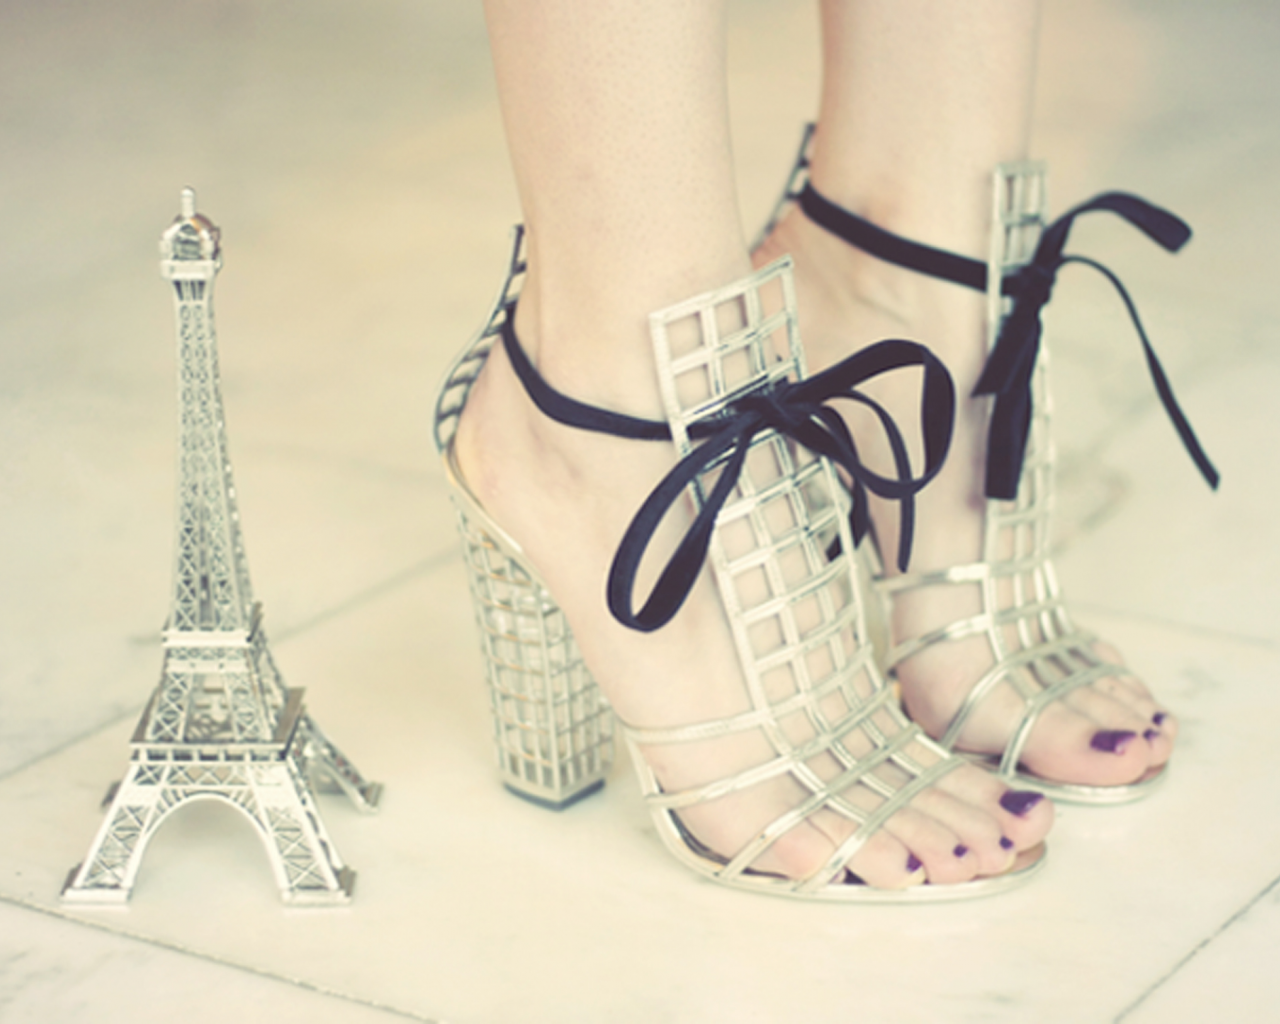 париж, мода, башня, туфельки